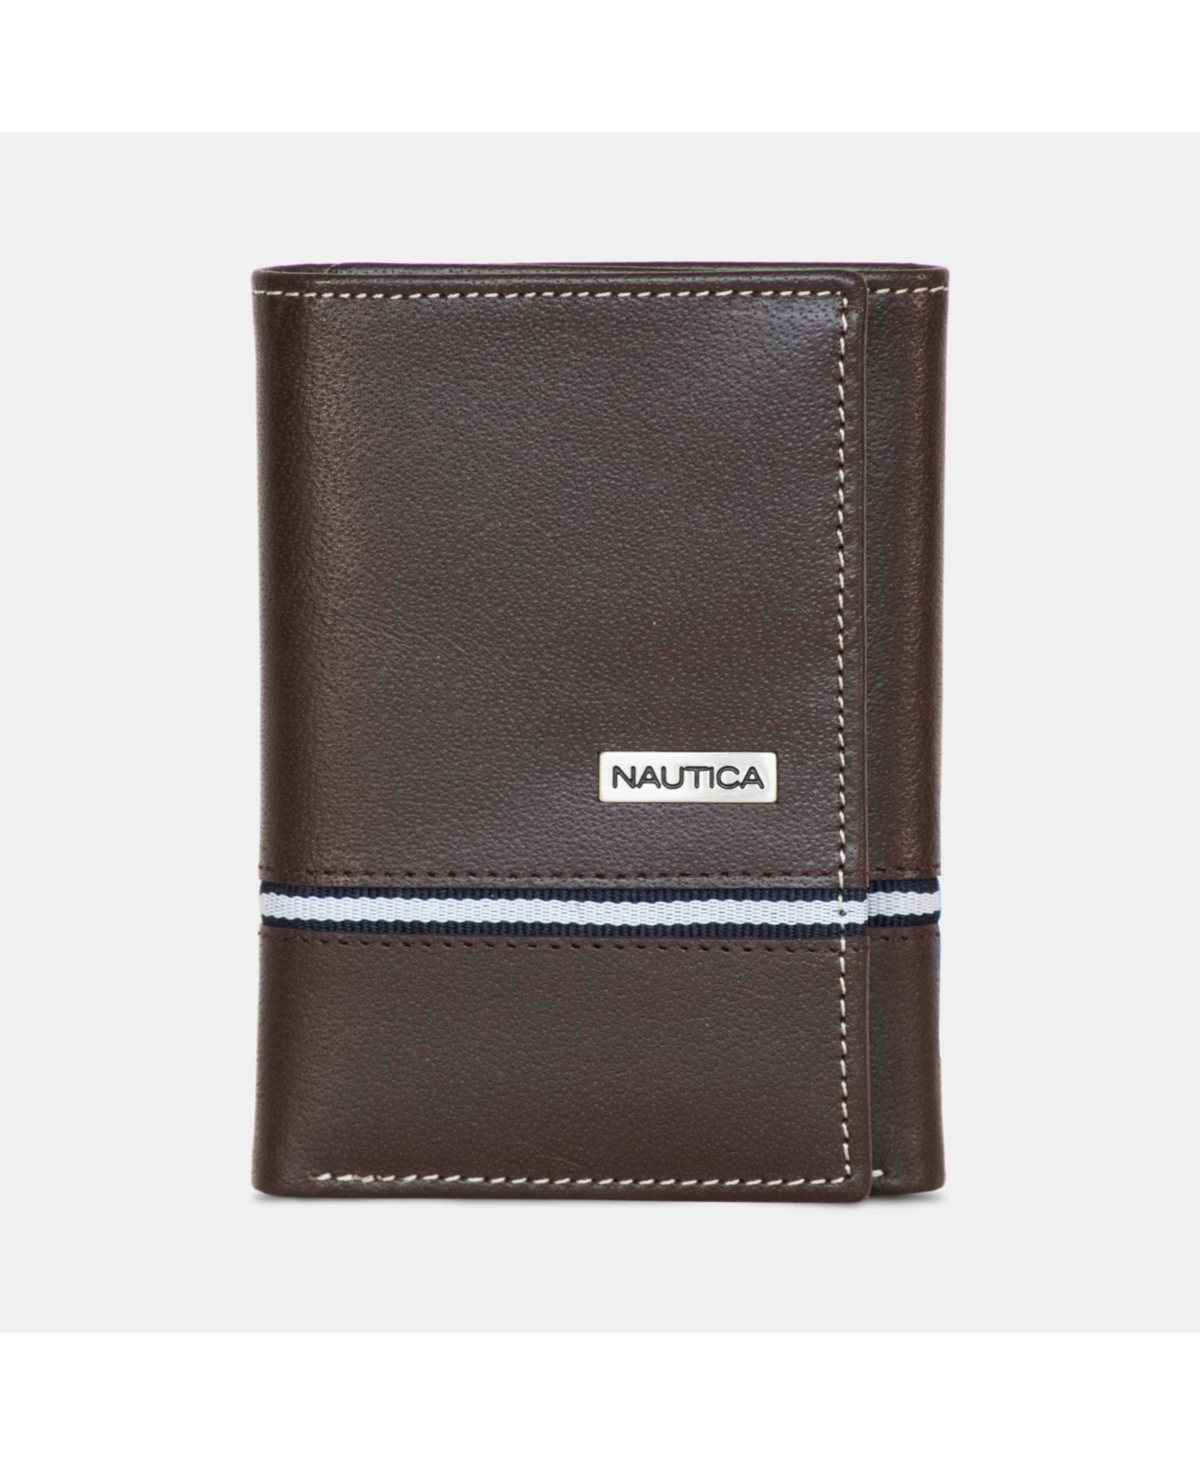 Nautica Men's Trifold Wallet In Brown